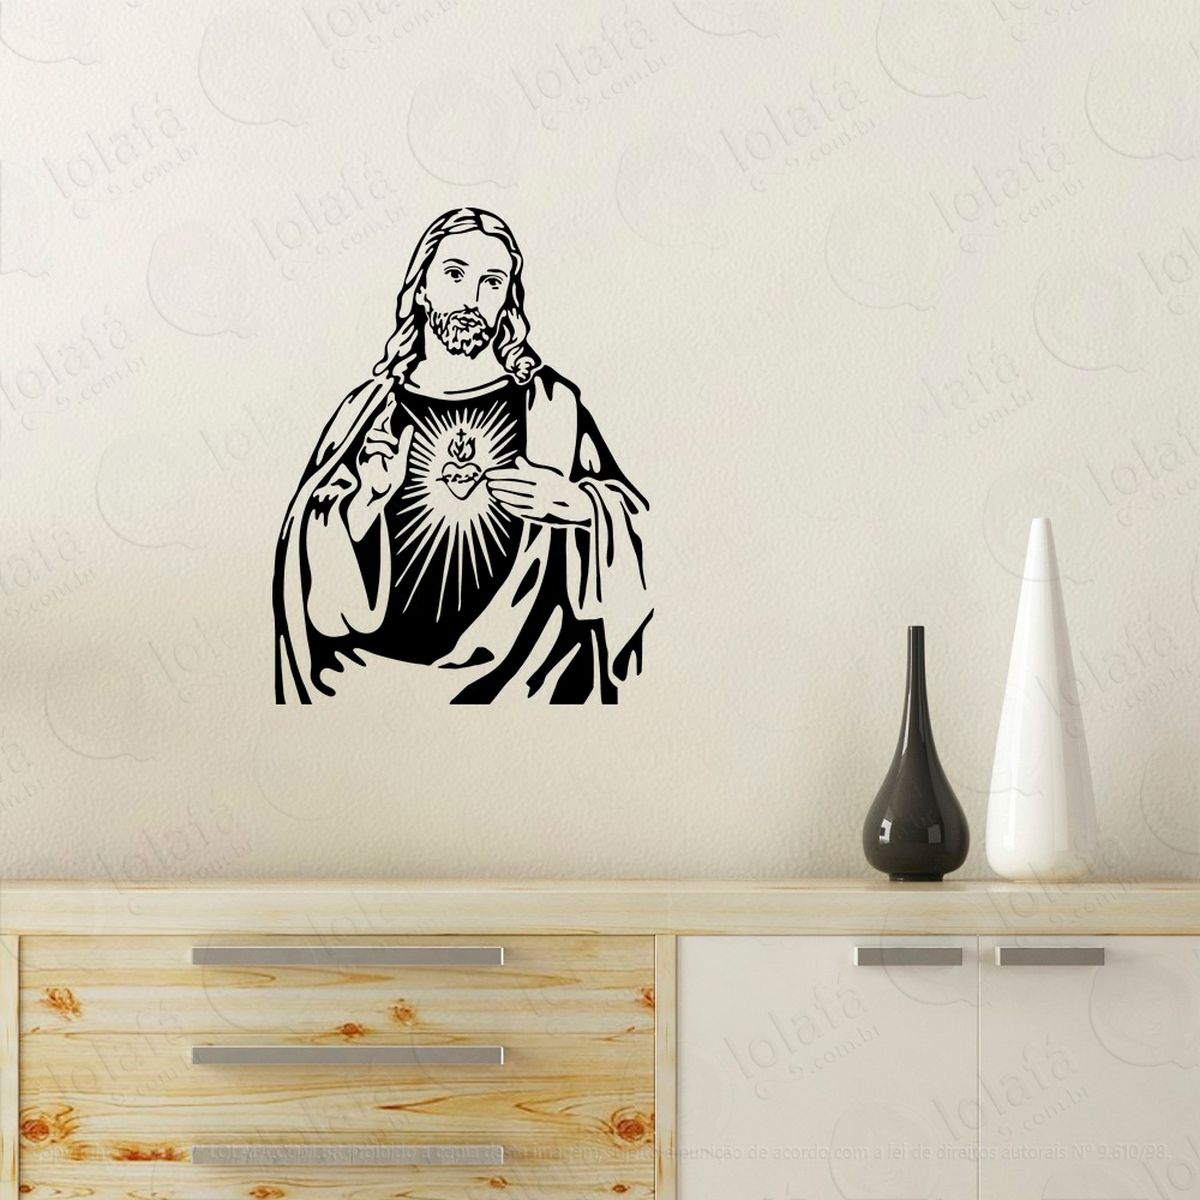 jesus cristo adesivo de parede decorativo para casa, quarto, sala e vidro - mod:29